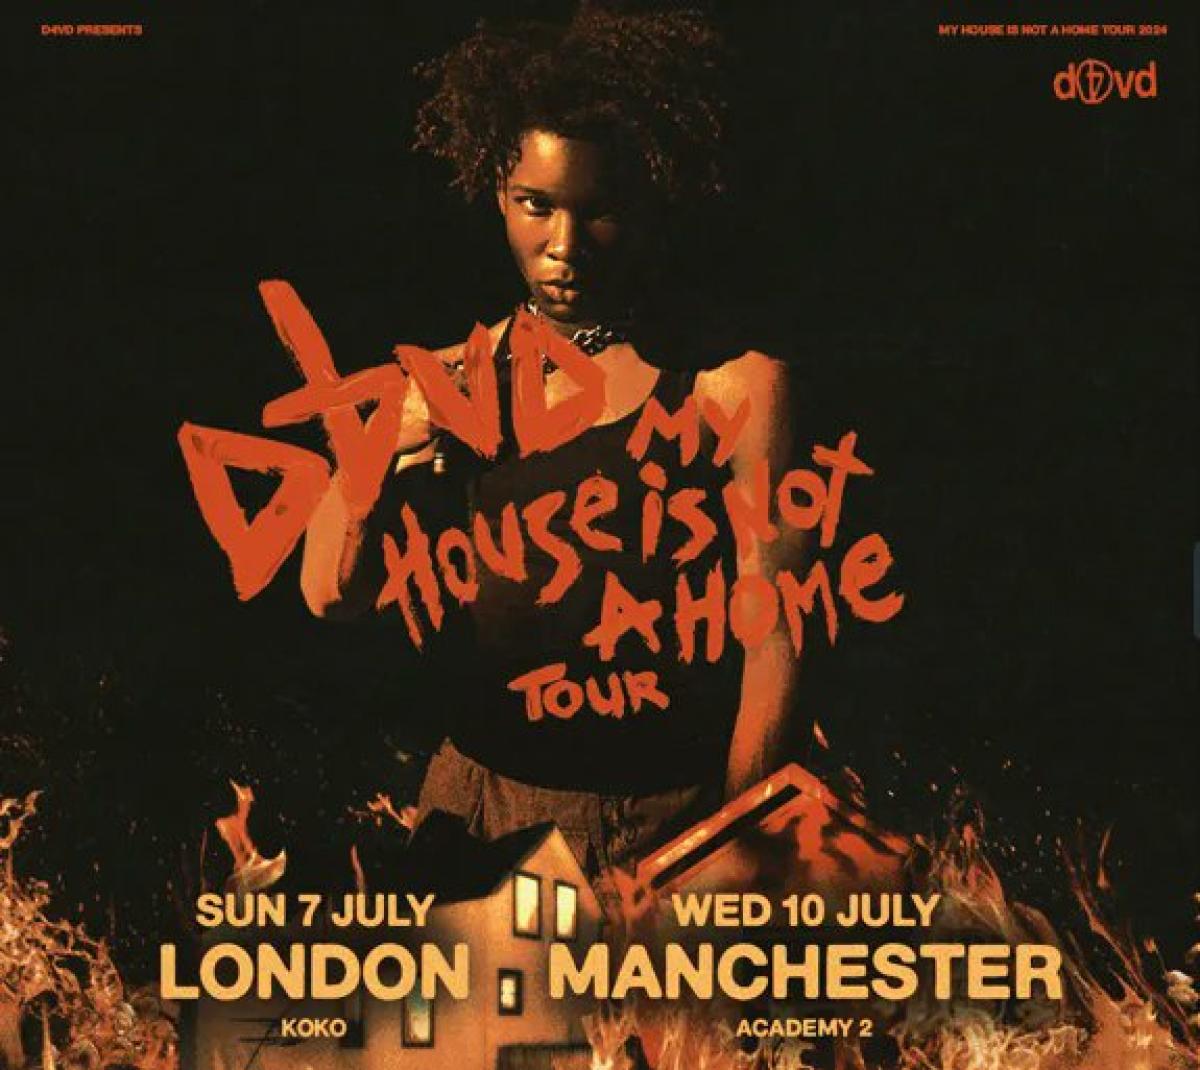 Billets D4vd - My House Is Not A Home Tour (Manchester Academy - Manchester)